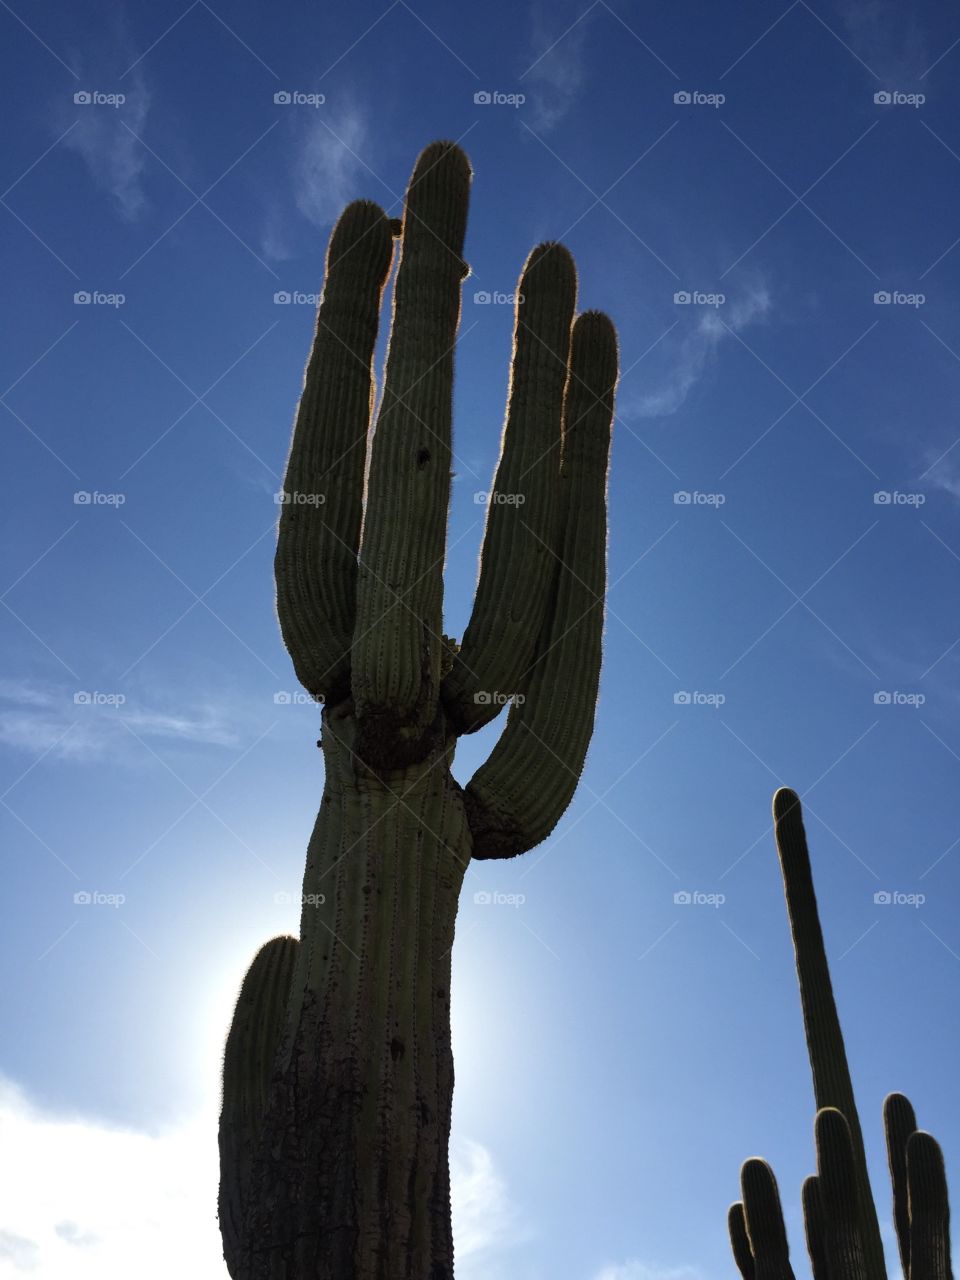 saguaro cactus silhouette against blue sky.